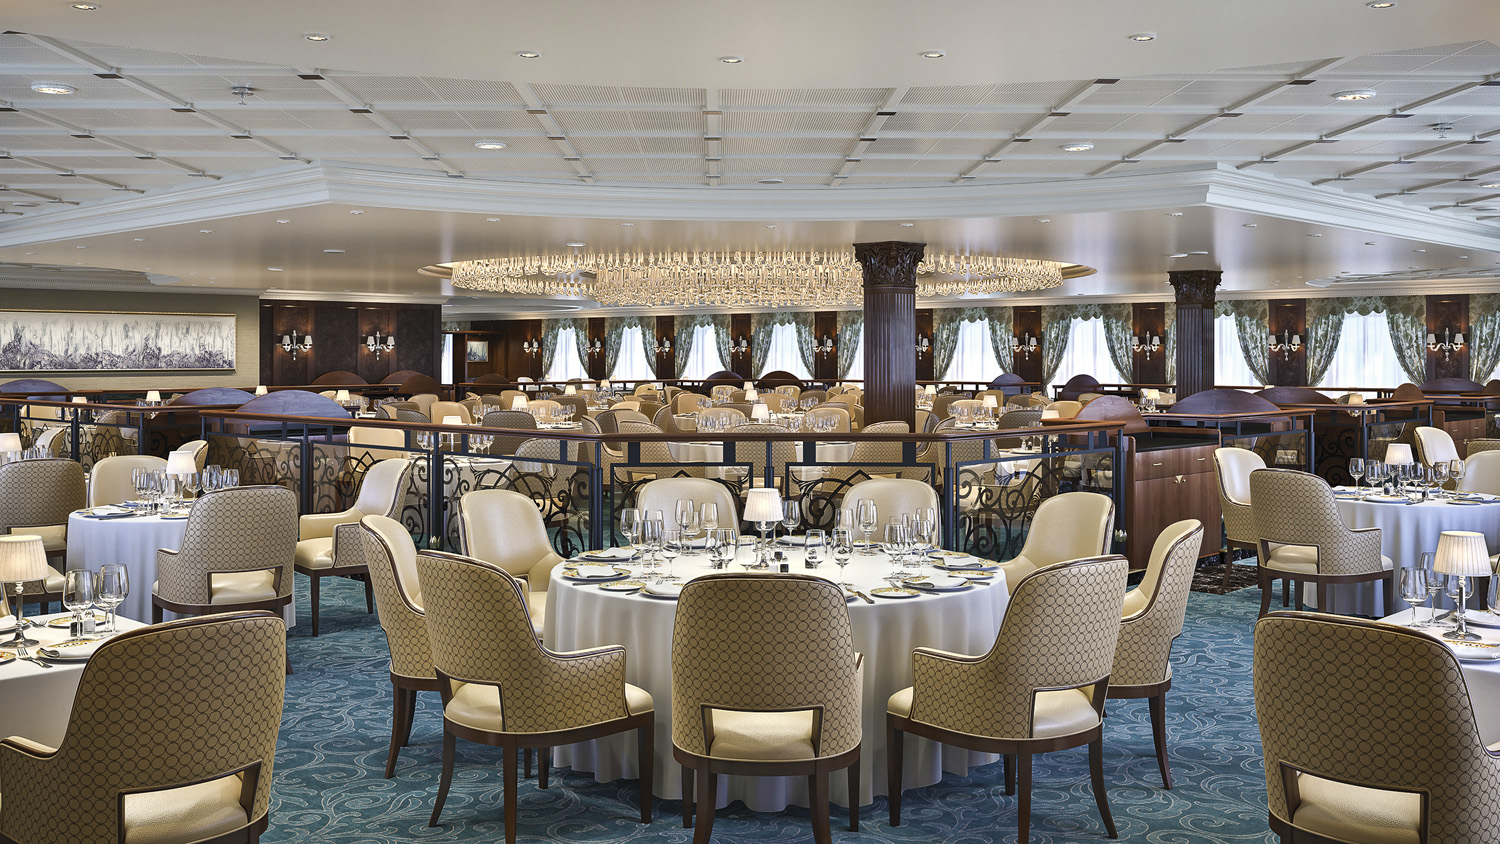 Oceania cruise dining room